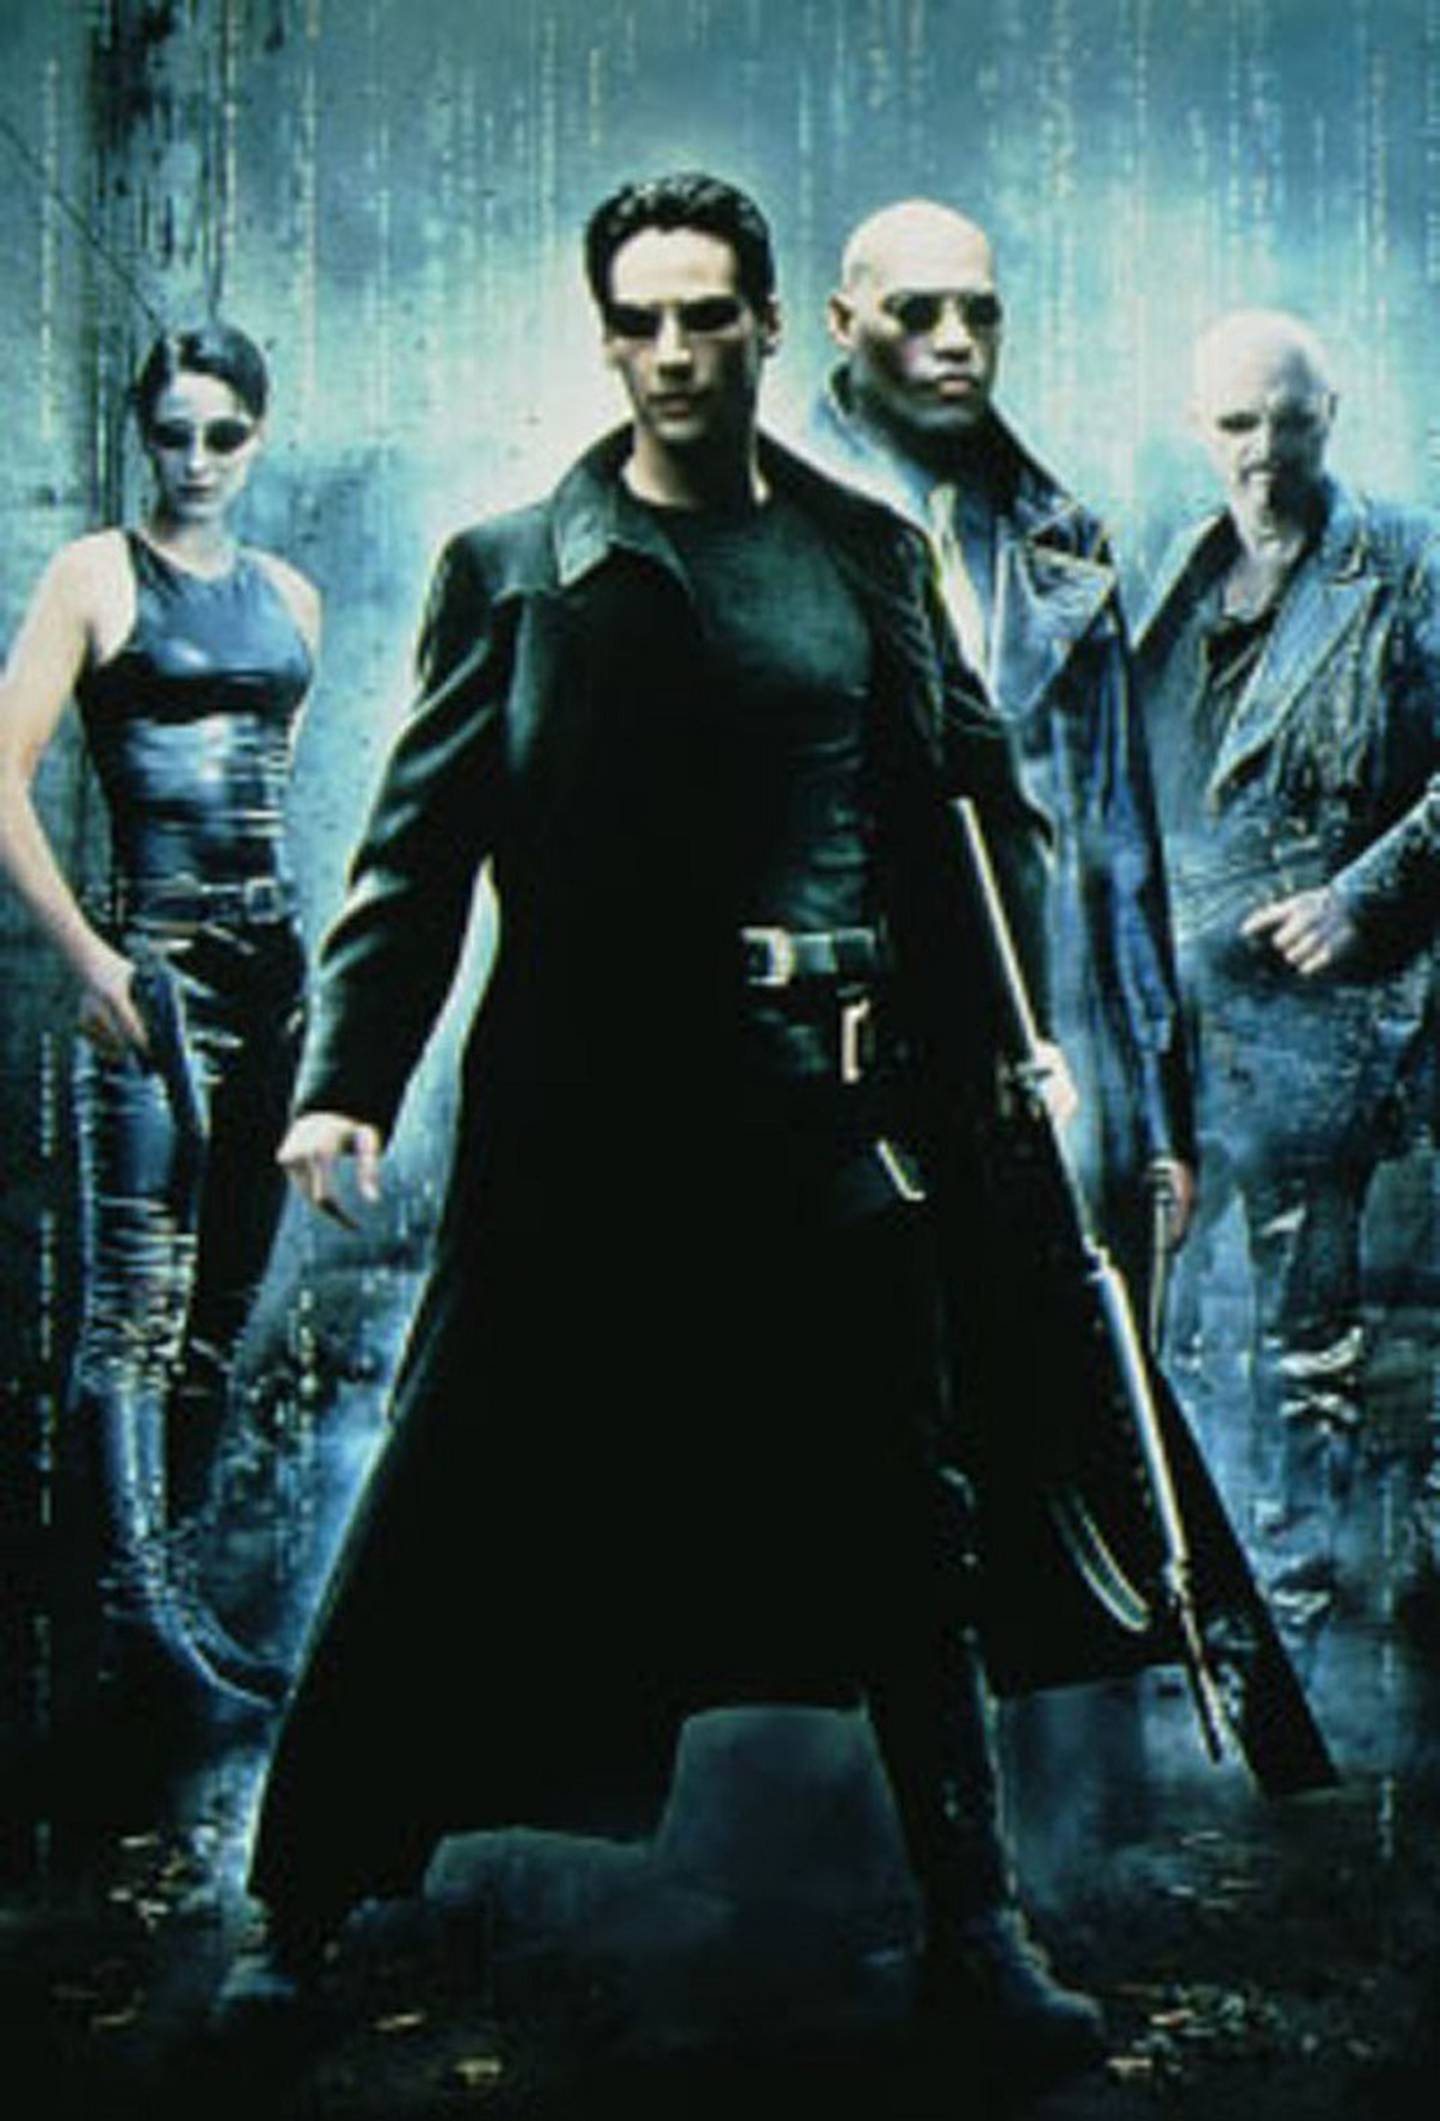 the matrix movies